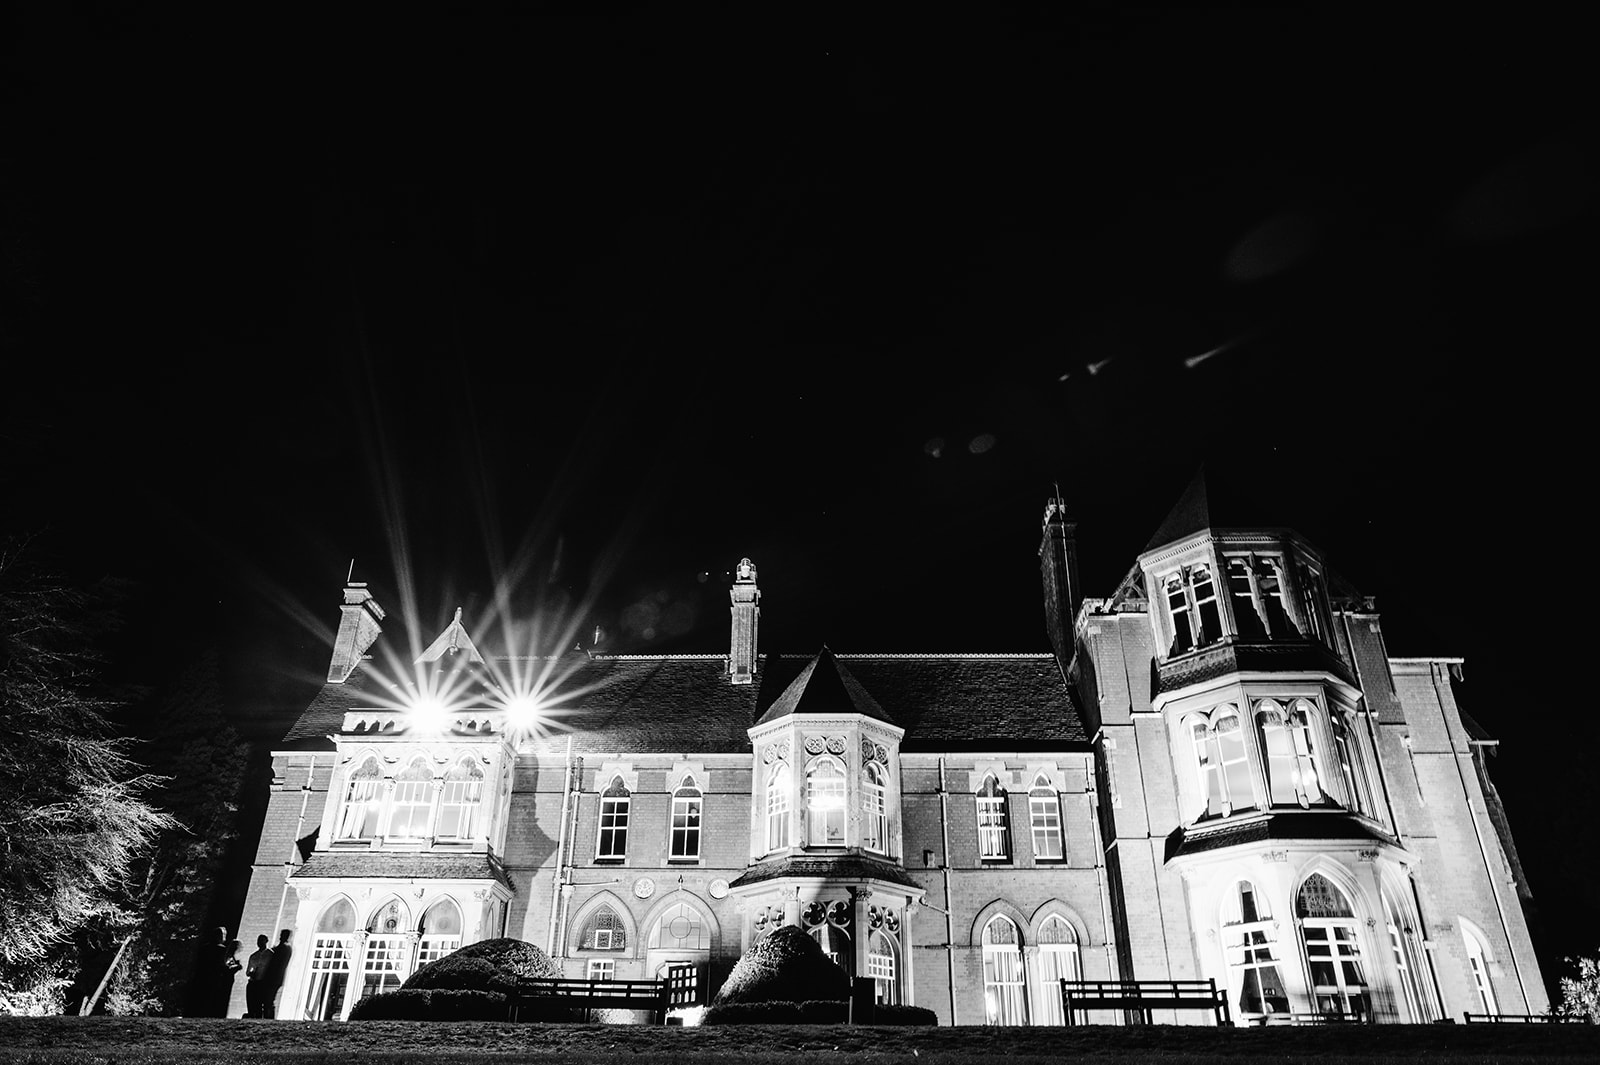 highbury hall by night in black and white